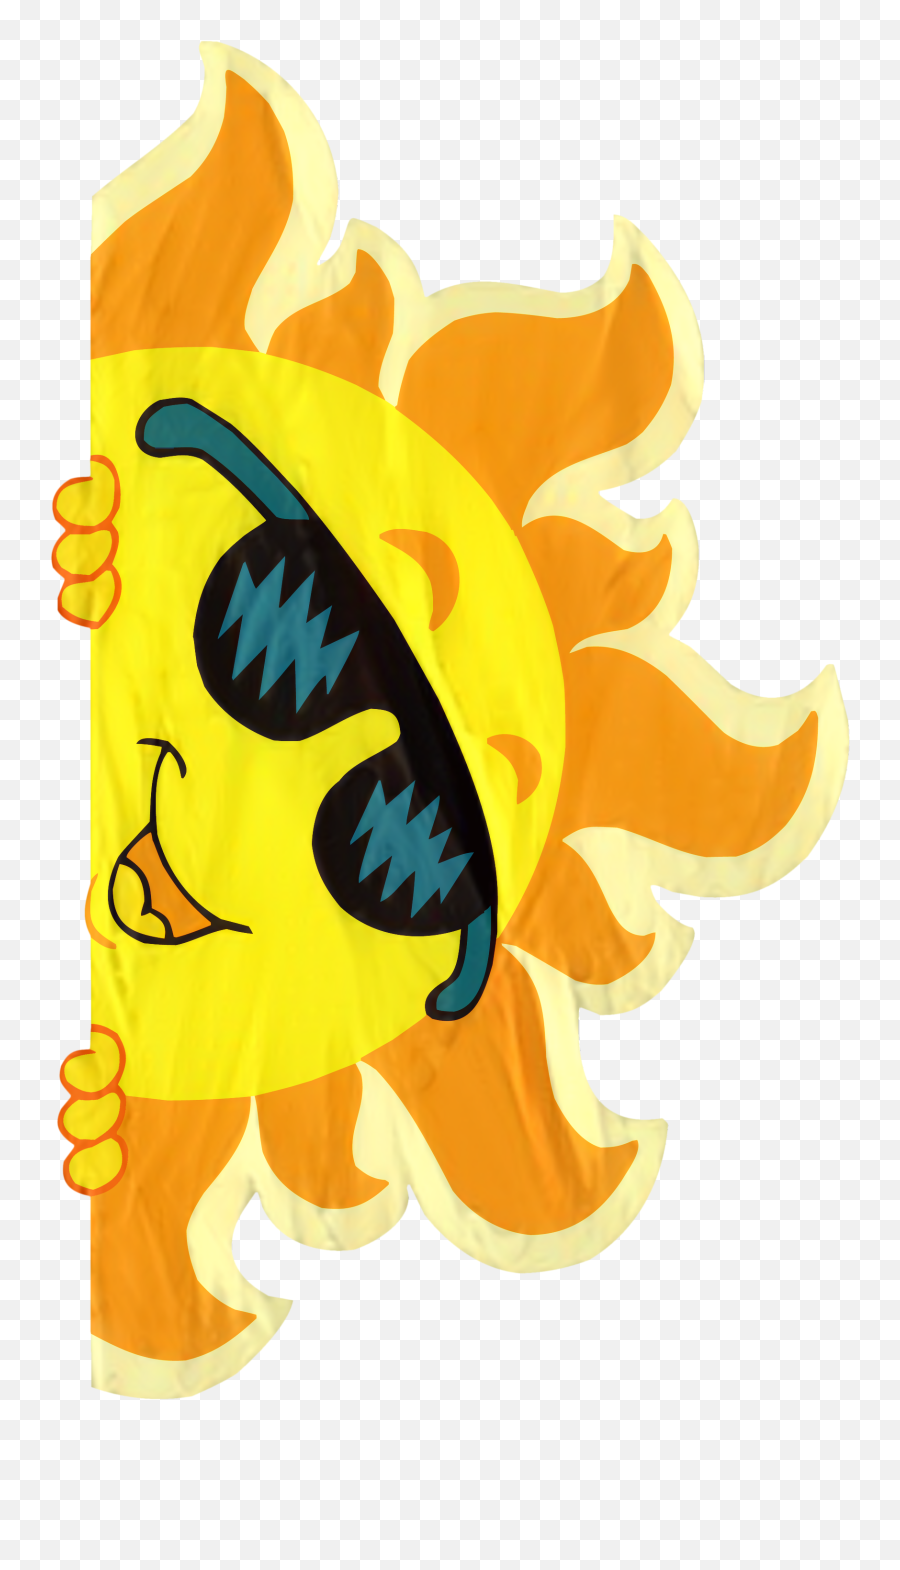 Play - Doh Summer Portable Network Graphics Clip Art Child Certificate Of Participation Kids Summer Camp Emoji,Playdough Clipart